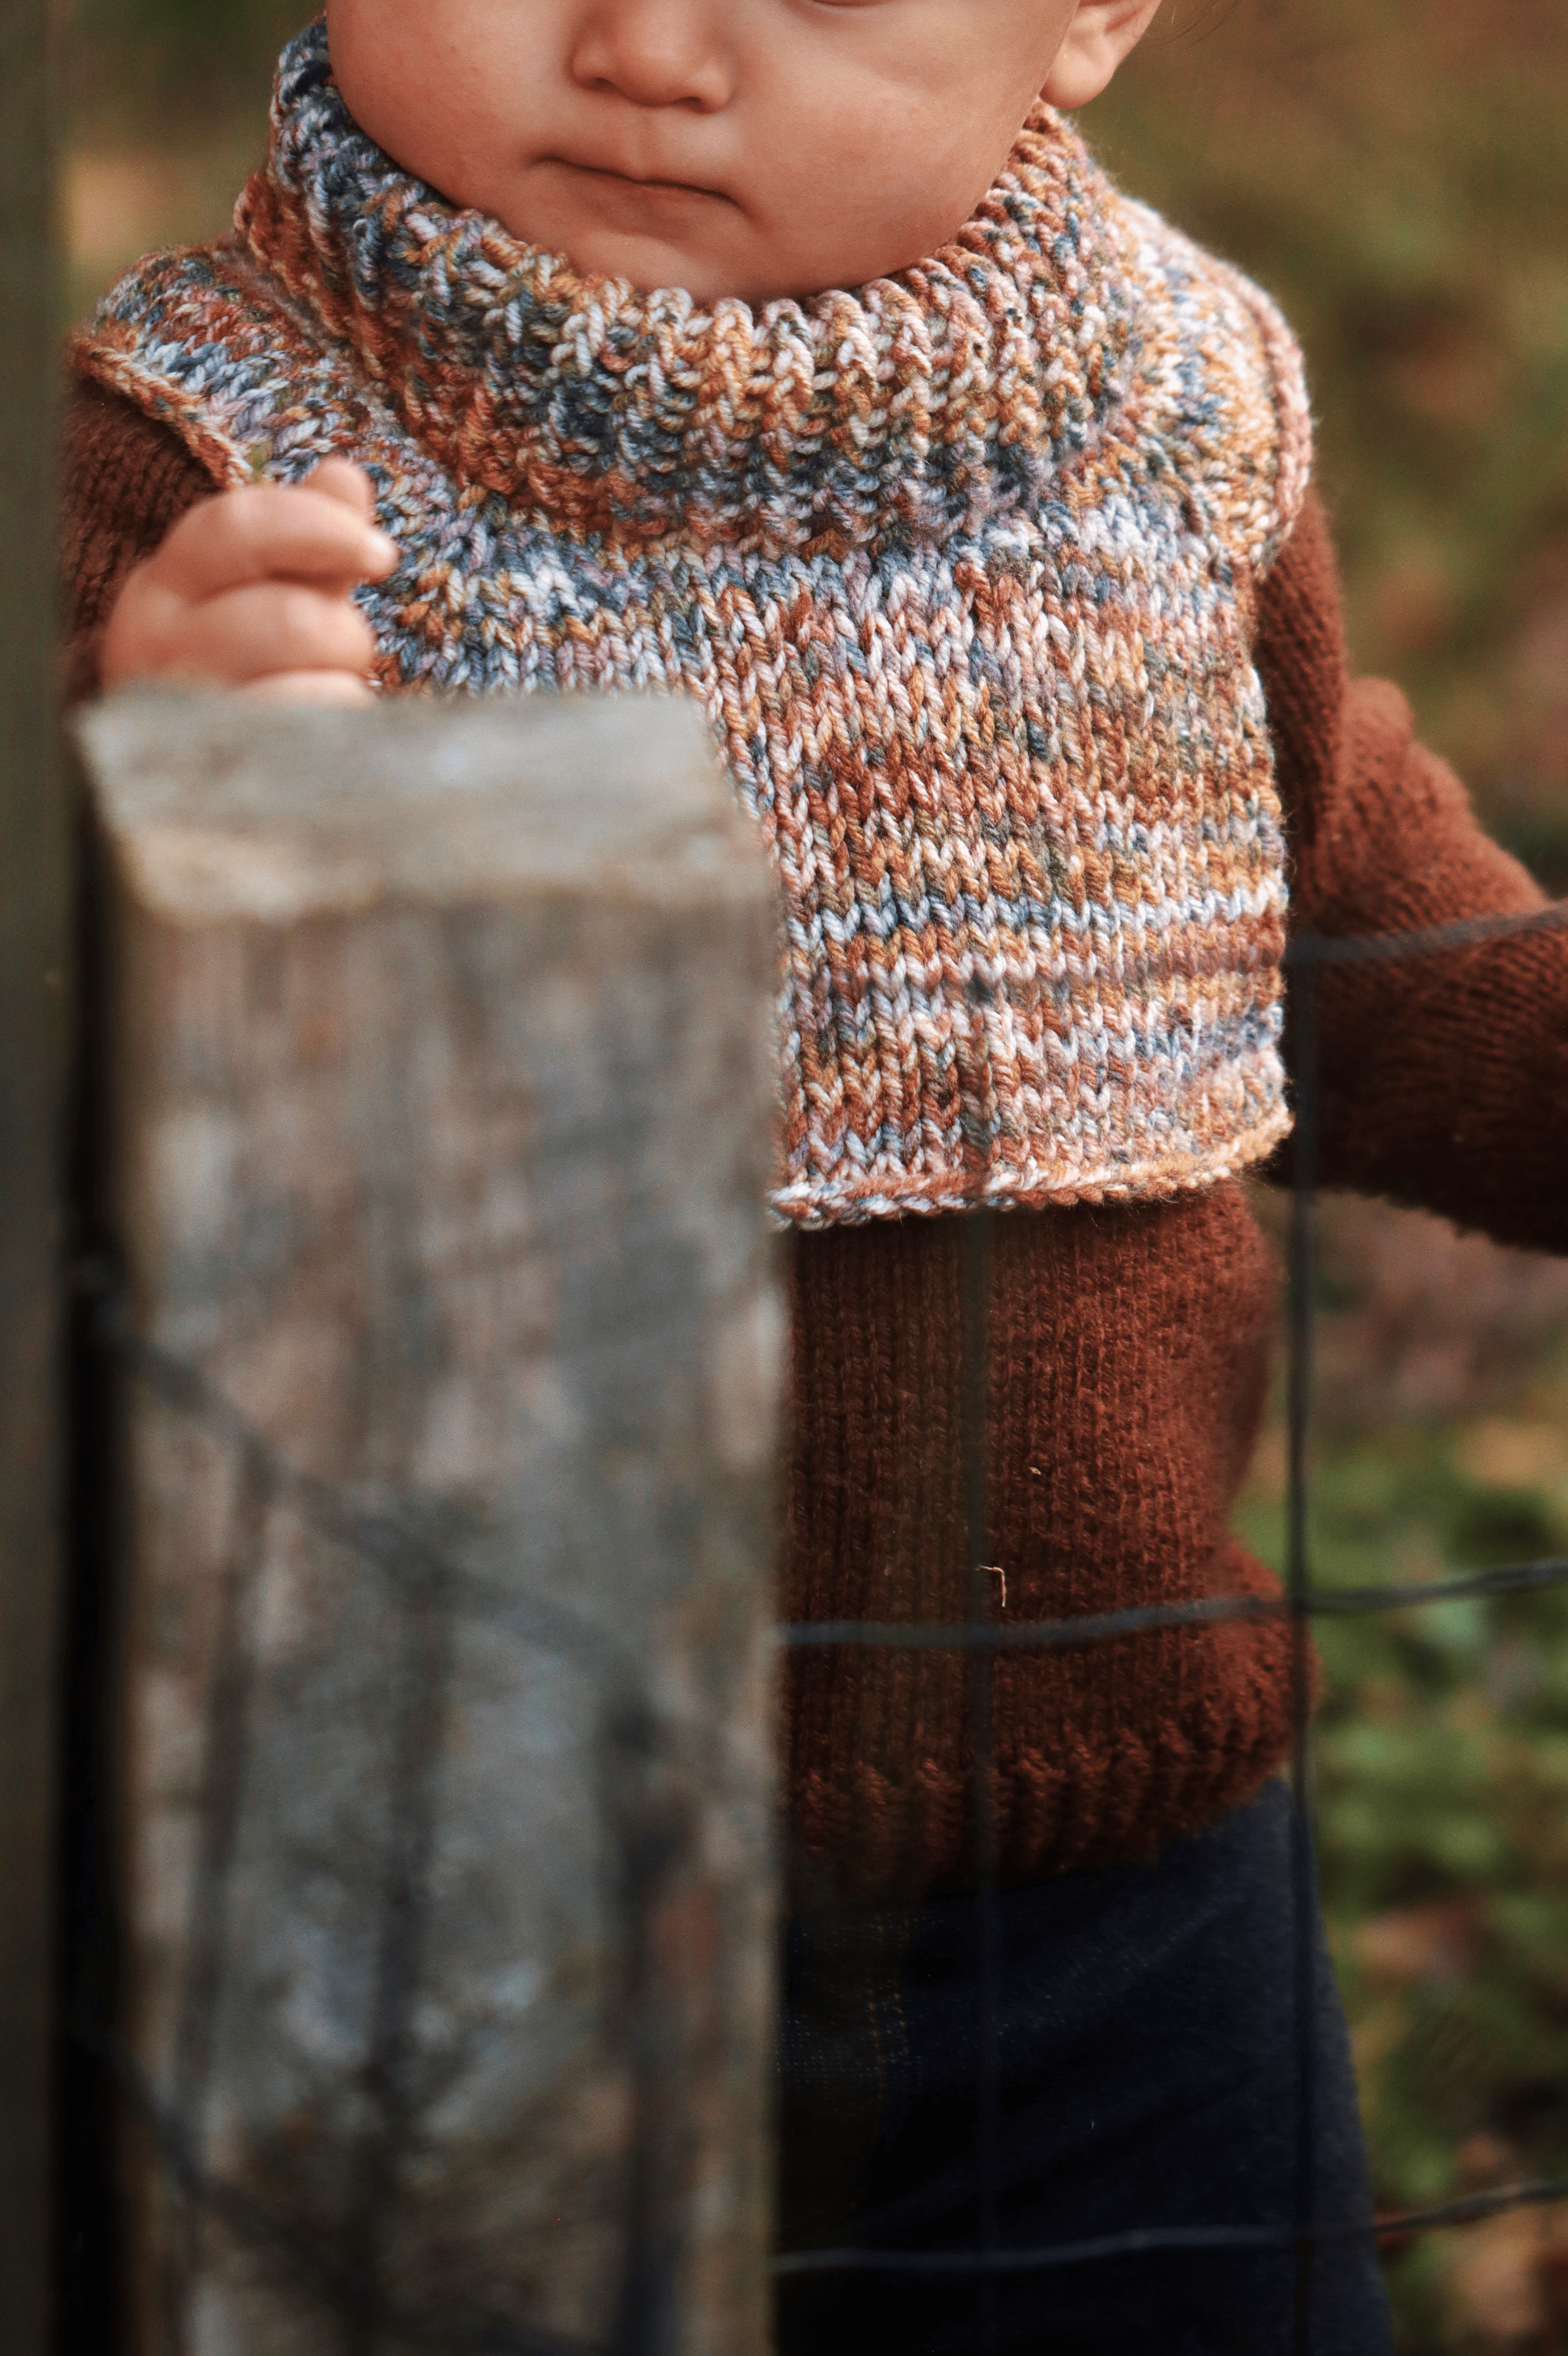 Easy Blanket Scarf Knitting Pattern by Darling Jadore, Chunky Knit Shawl